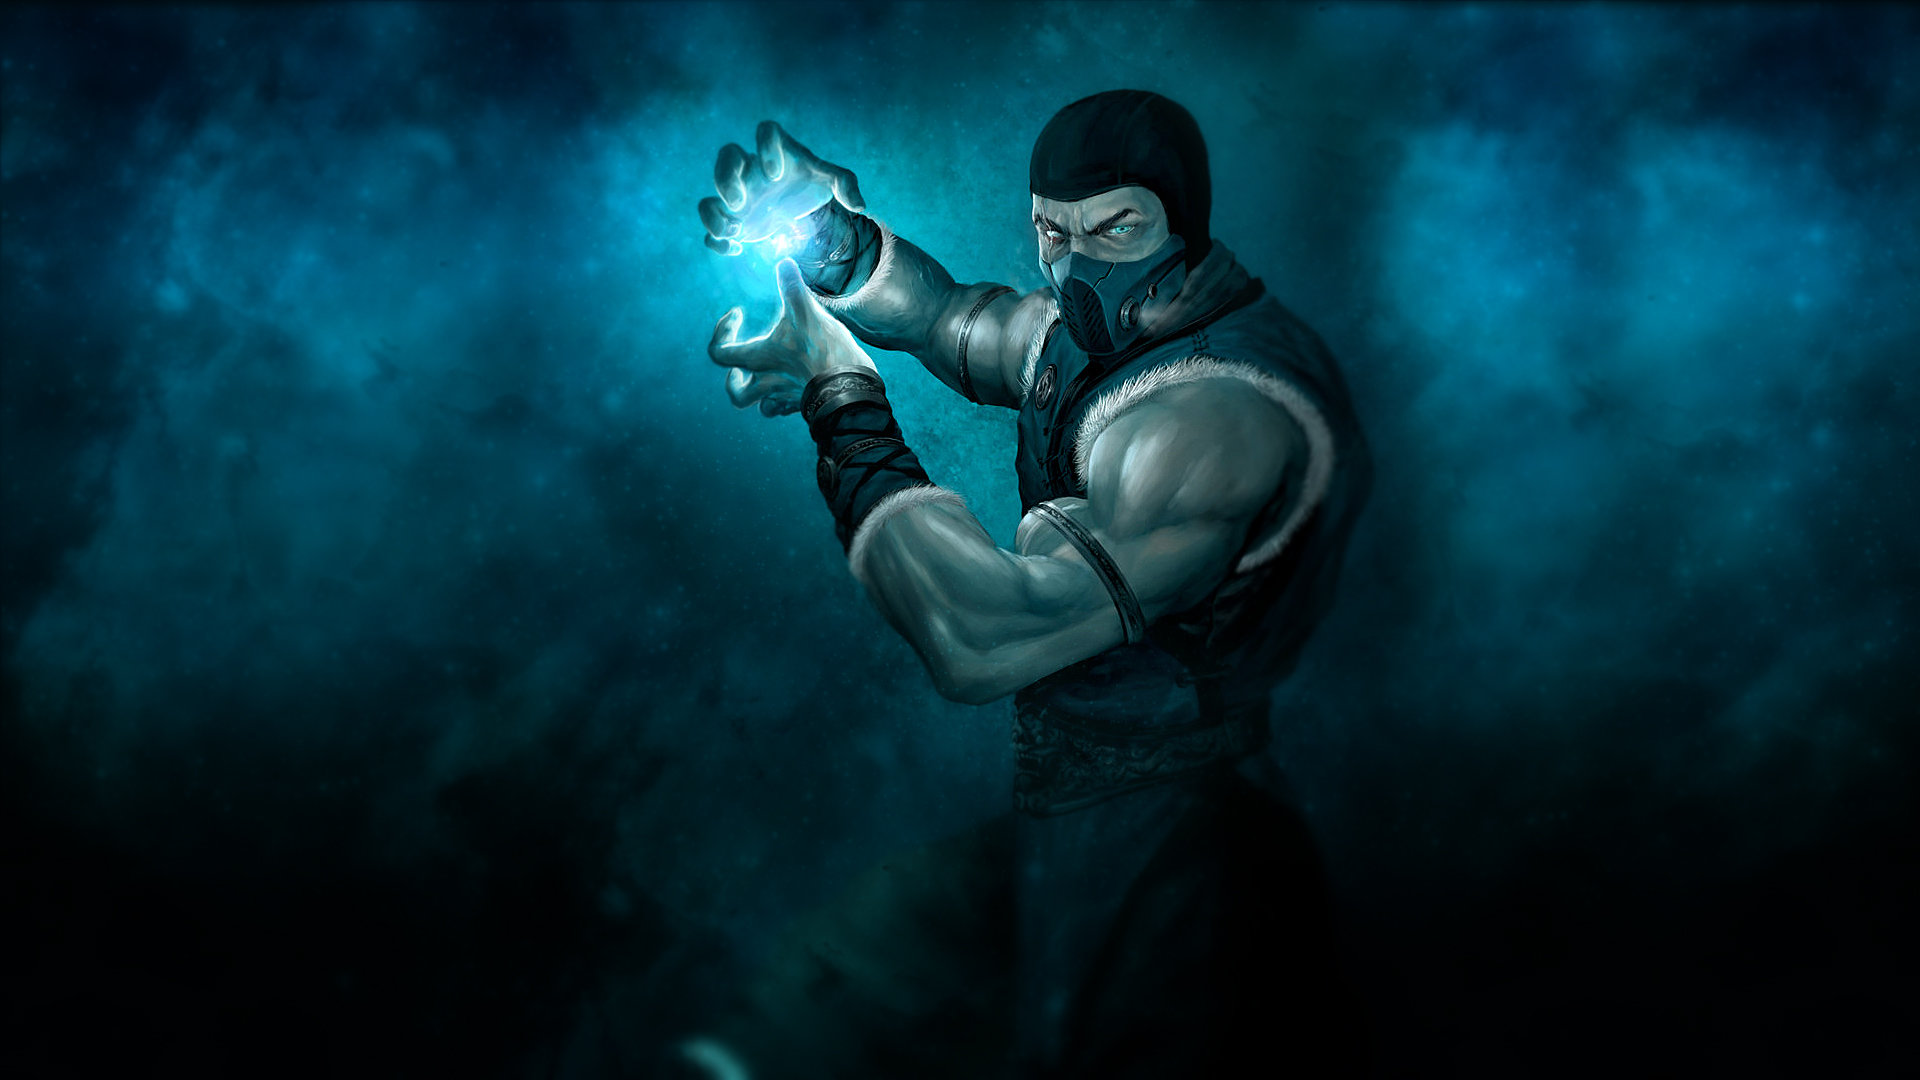 Download 1080p Sub-Zero (Mortal Kombat) PC wallpaper ID:183221 for free